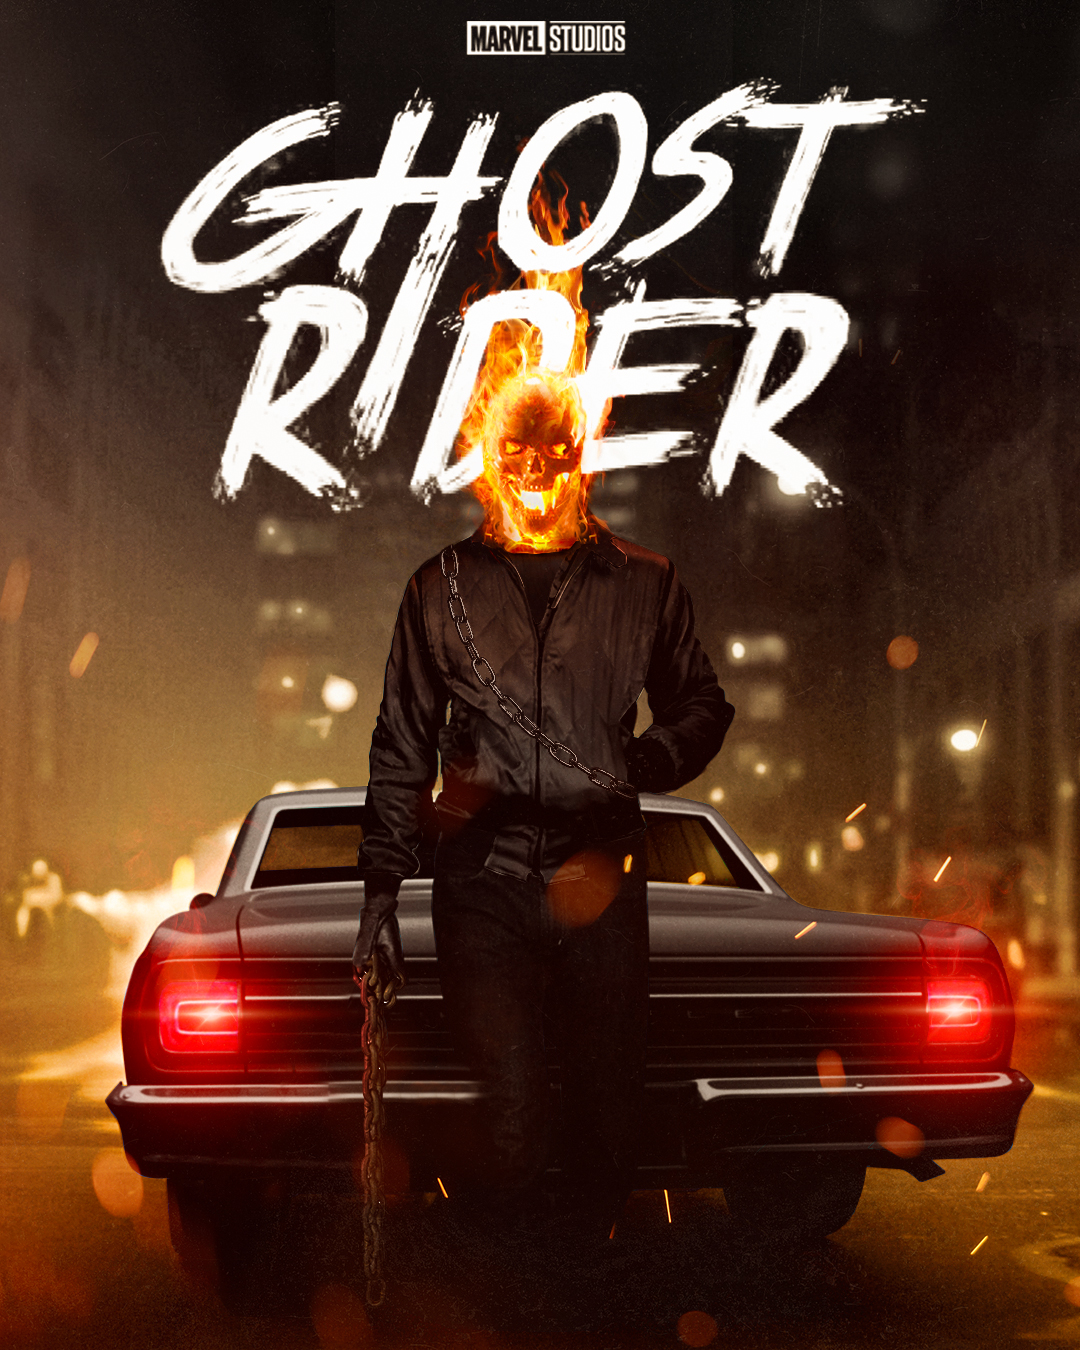 Ryan Gosling as ghost rider